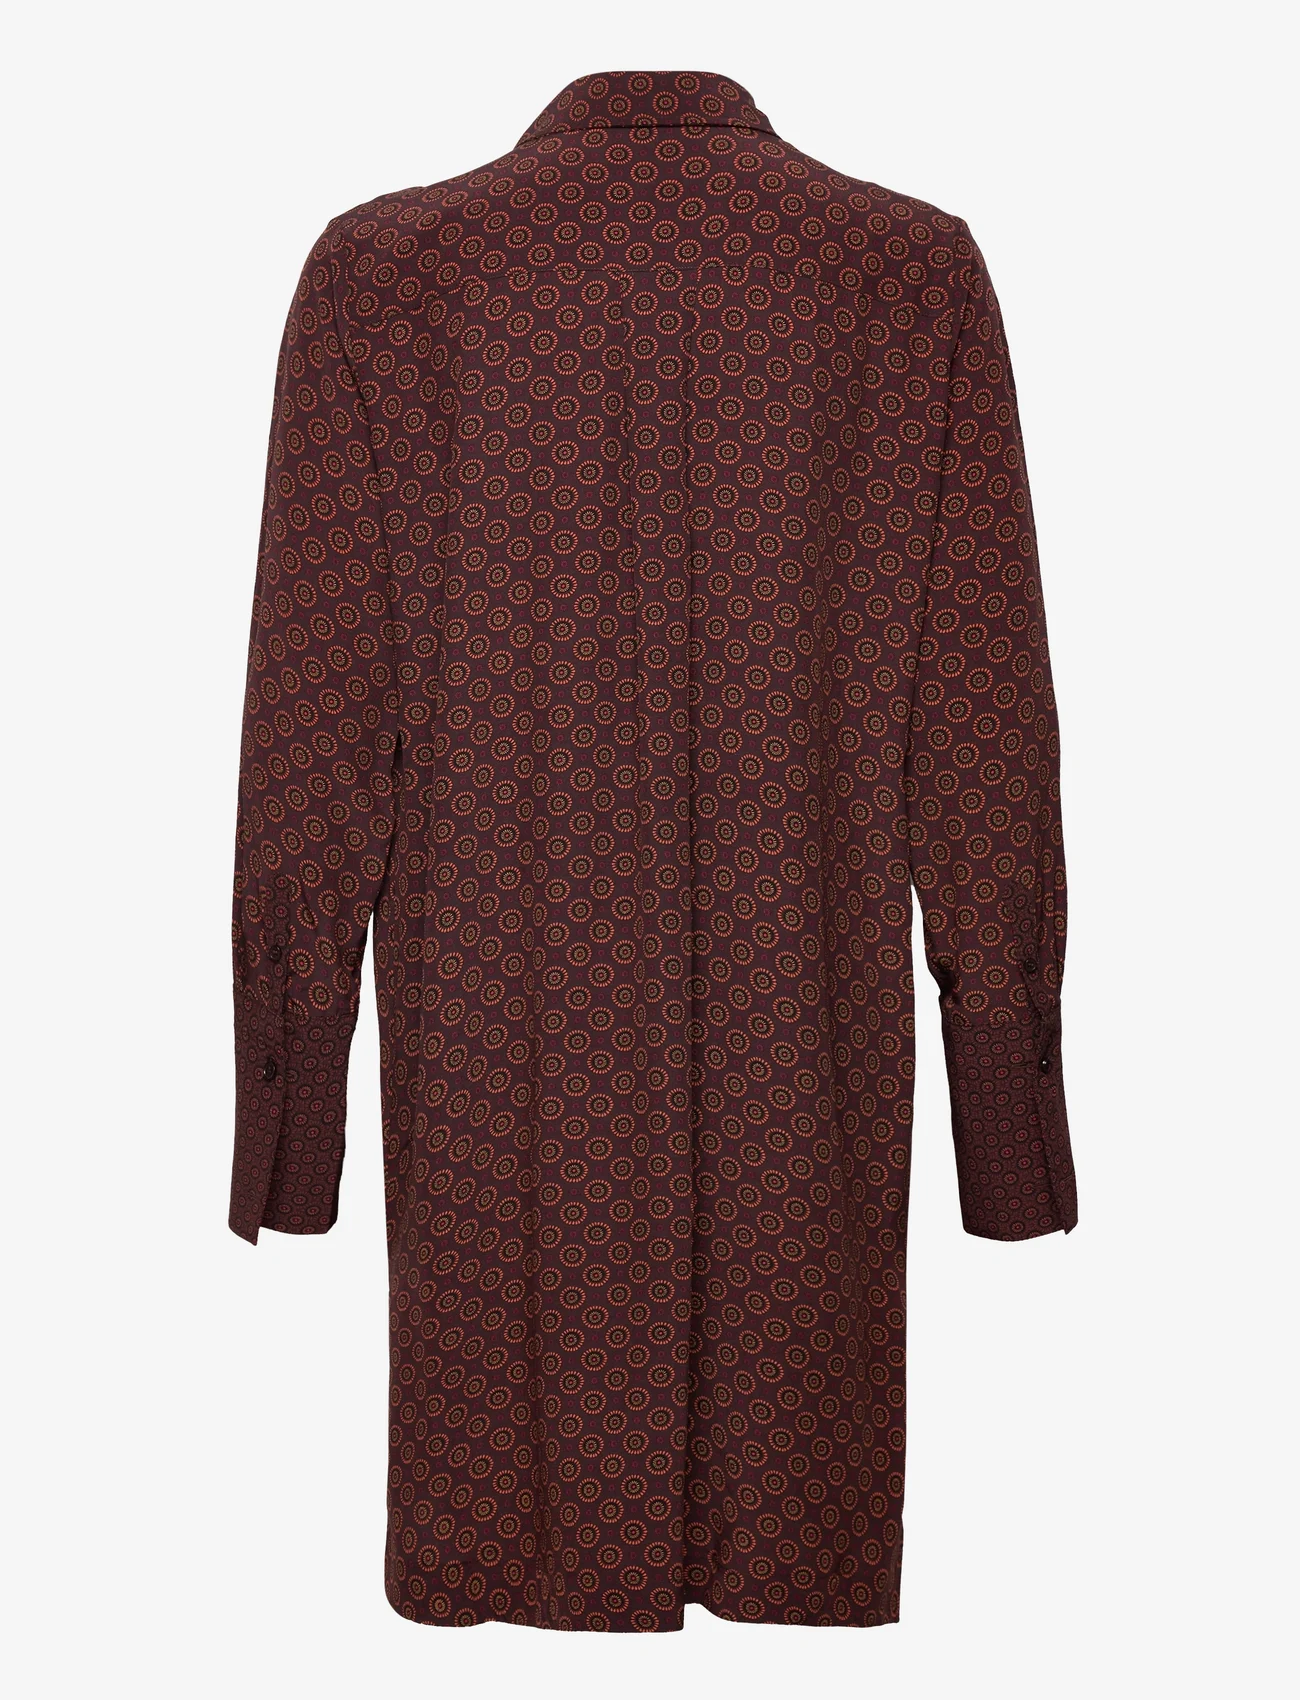 HUNKYDORY - Jamie Shirt Dress - hemdkleider - chocolate brown aop - 1